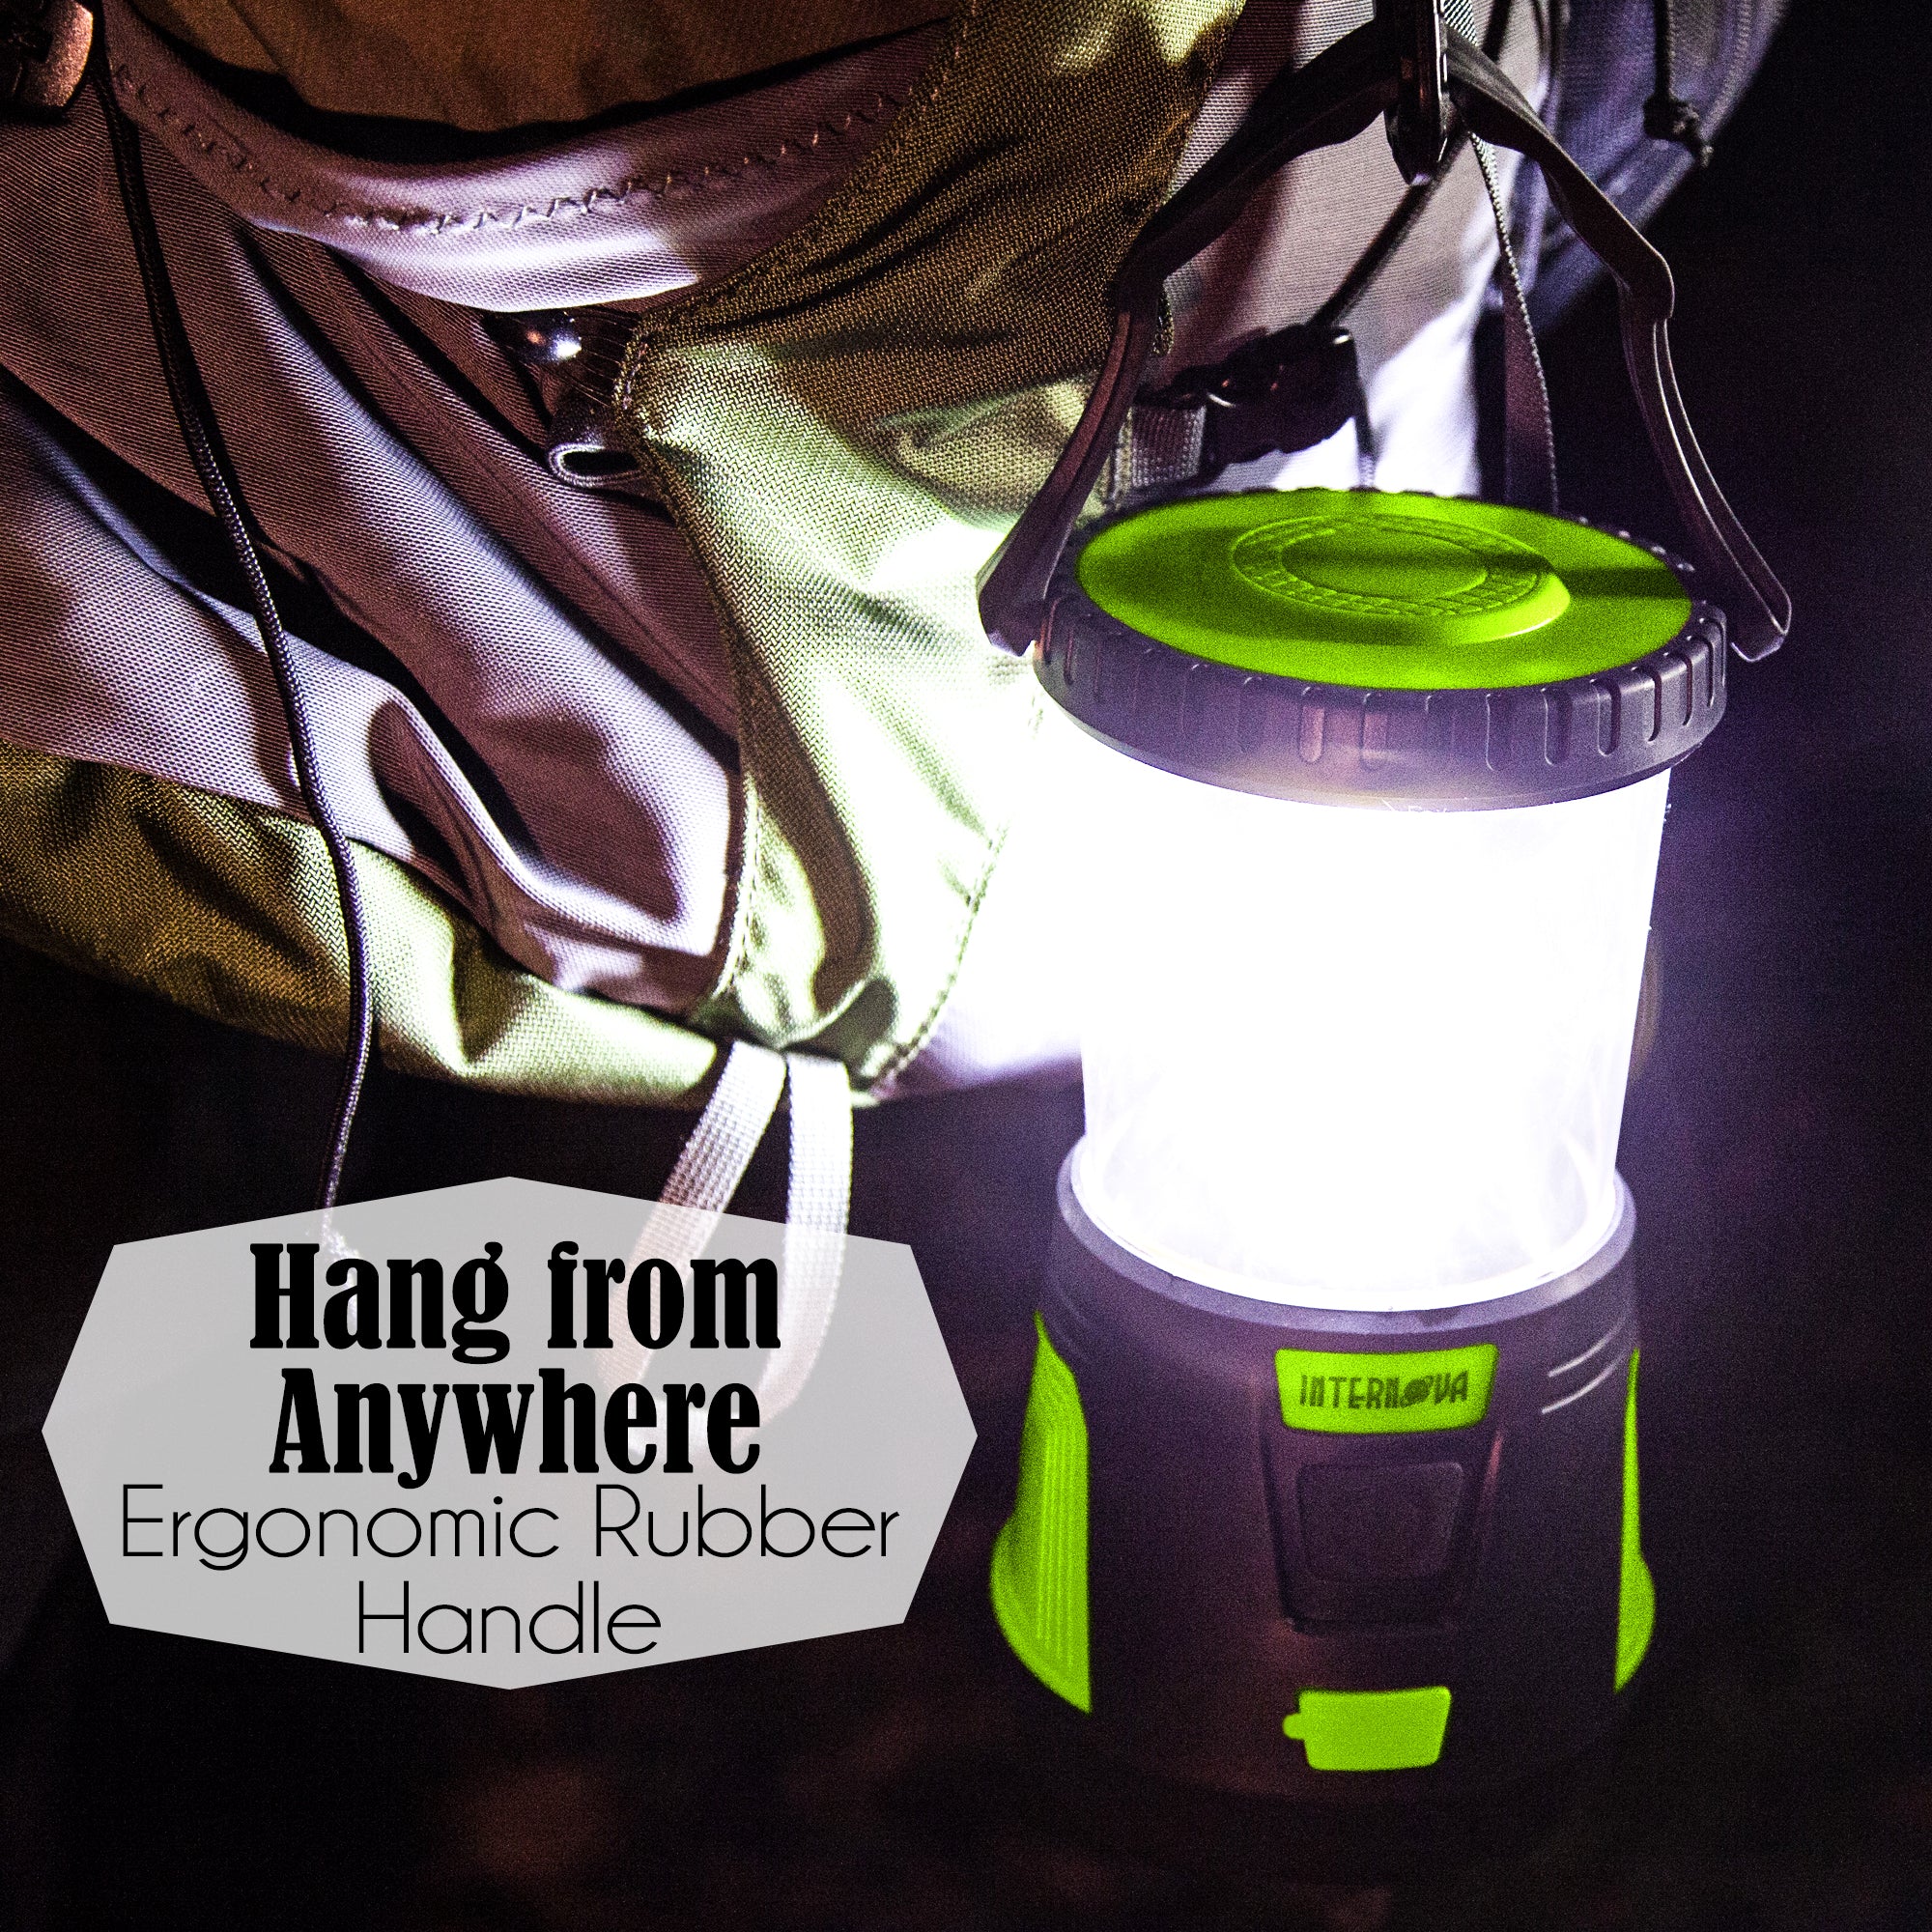 Halo 1000 Lumen Rechargable Lantern withPower Bank ,Black